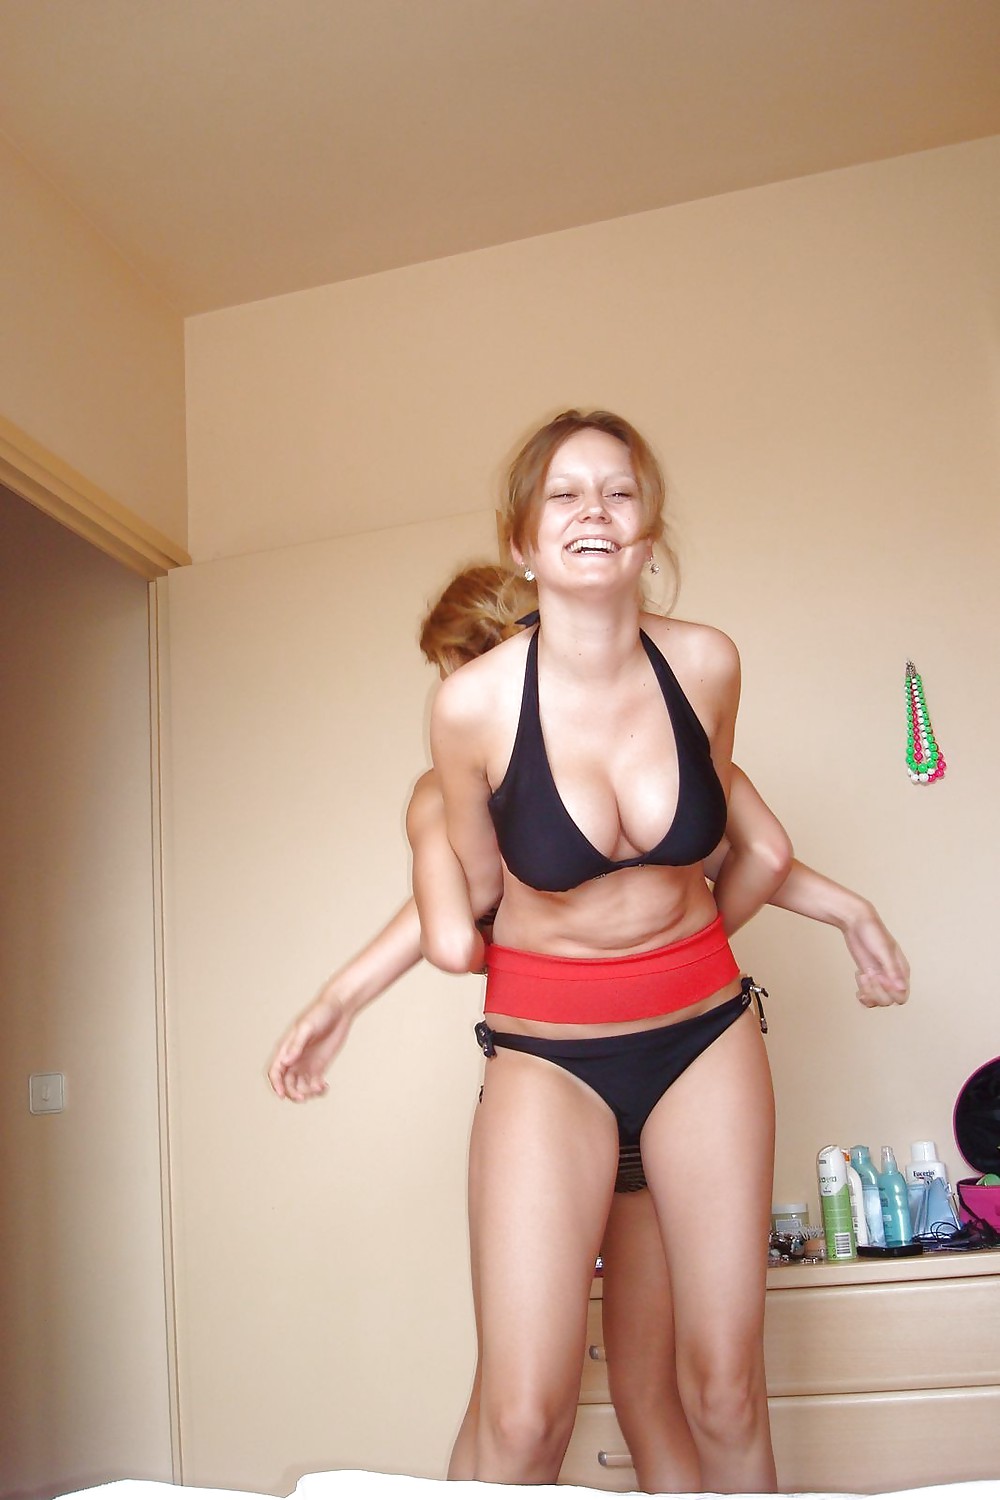 Bikini Amateurs With Big Tits porn pictures